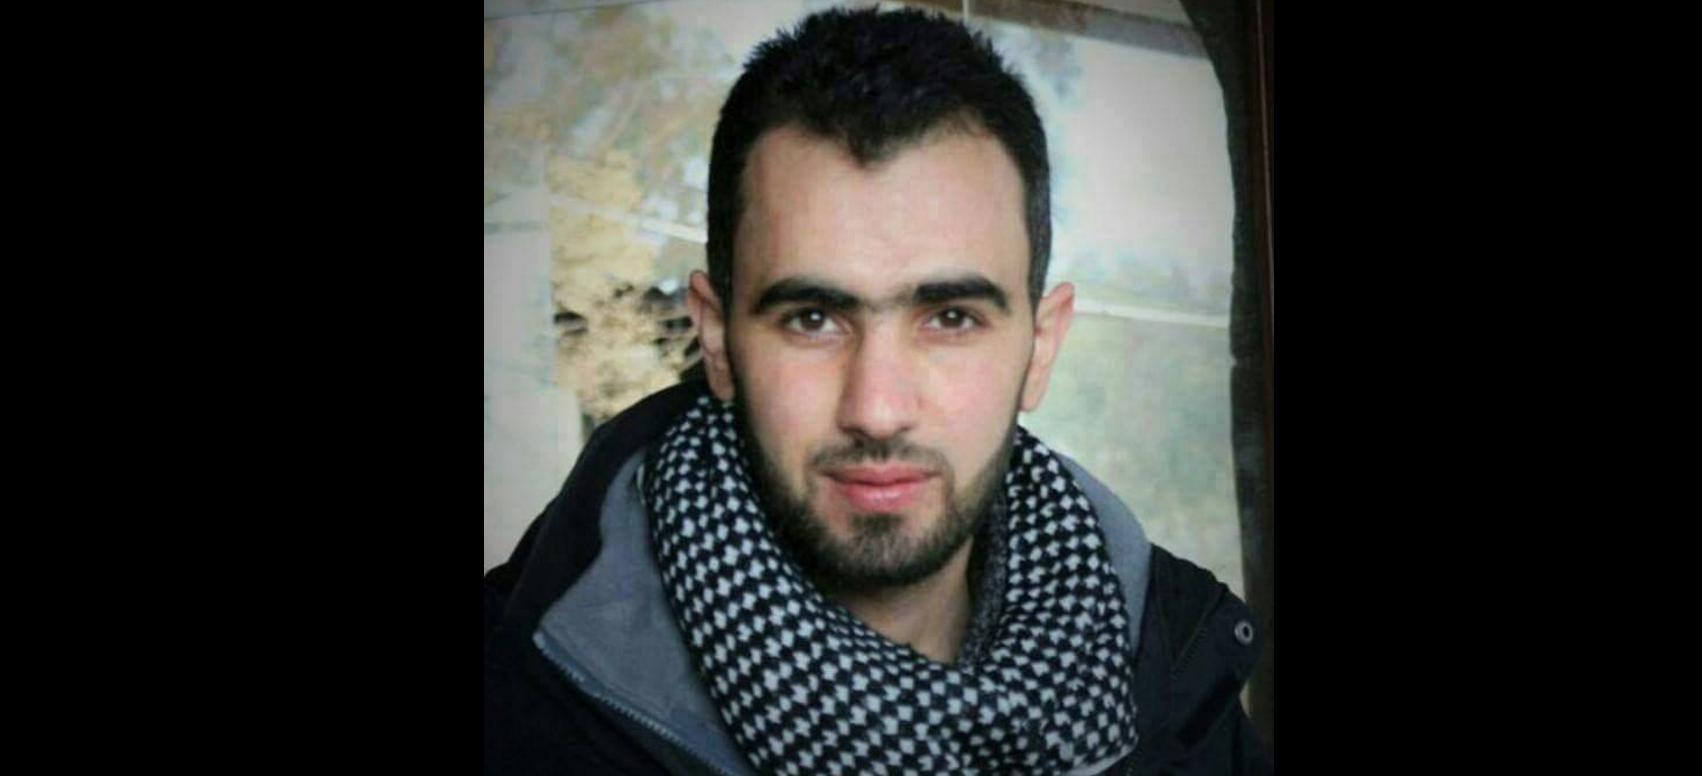 reportero-sirio-hadi-al-abdullah